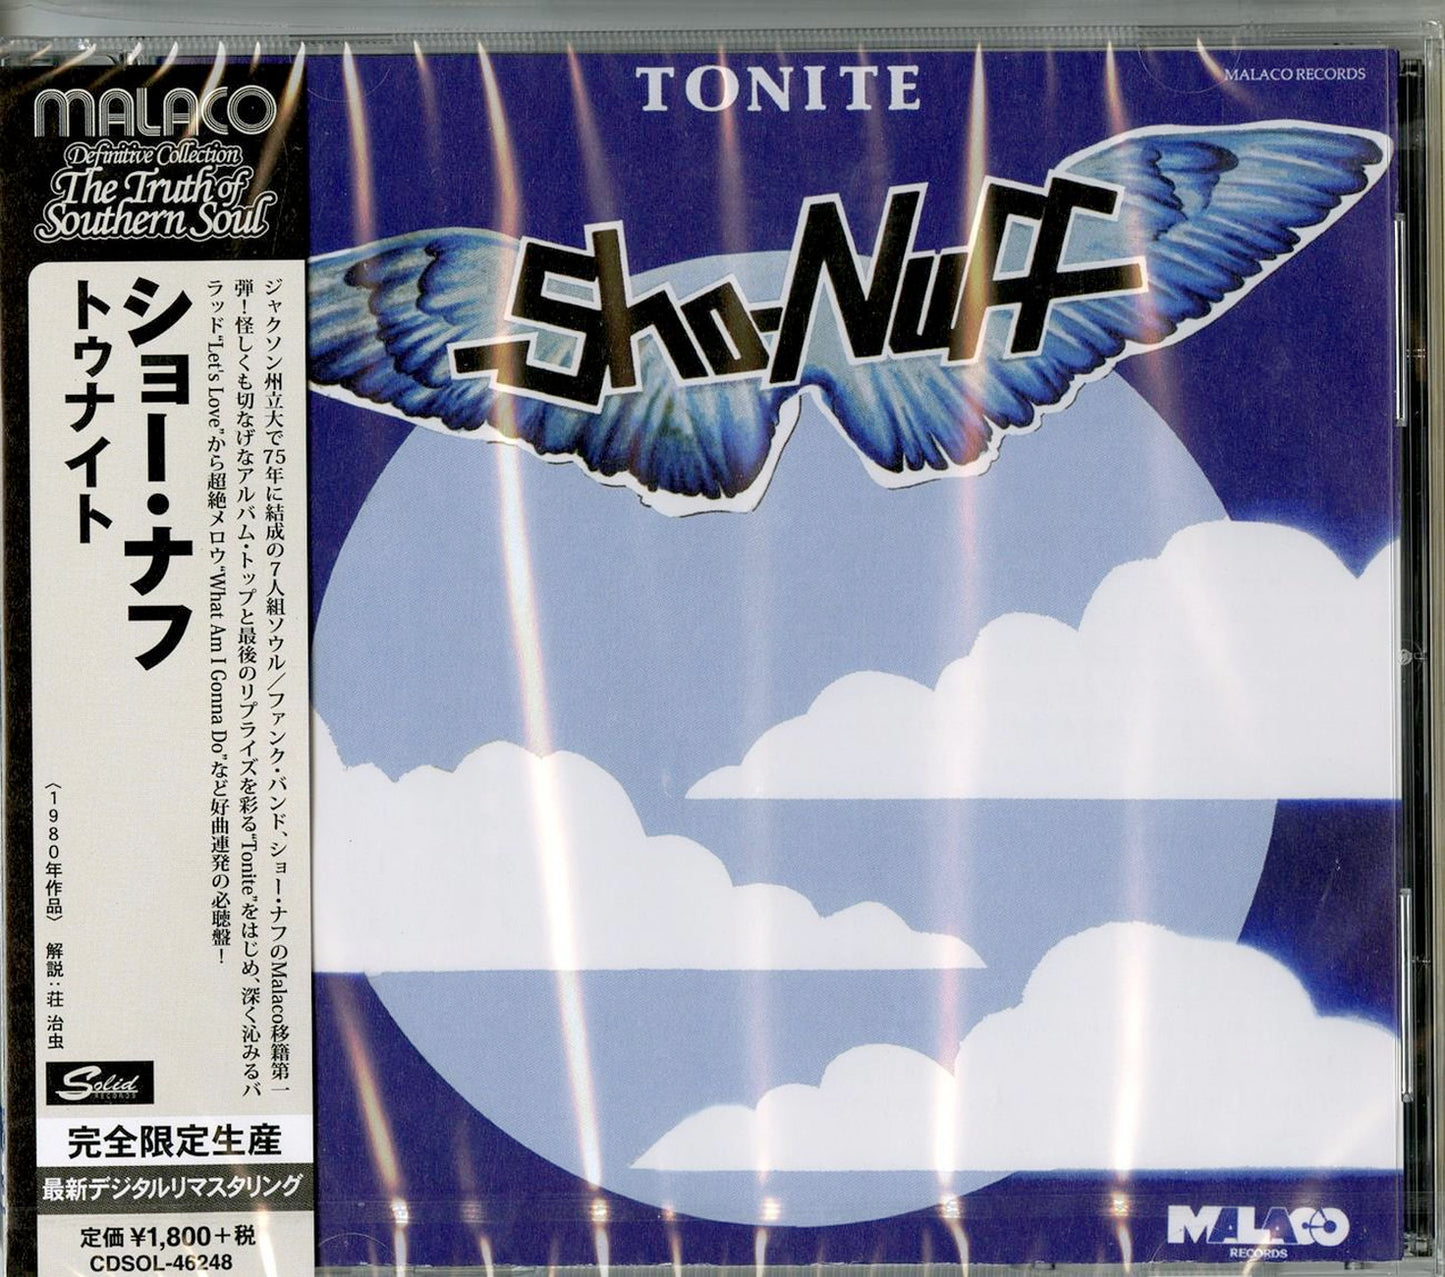 Sho-Nuff - Tonite - Japan  CD Limited Edition